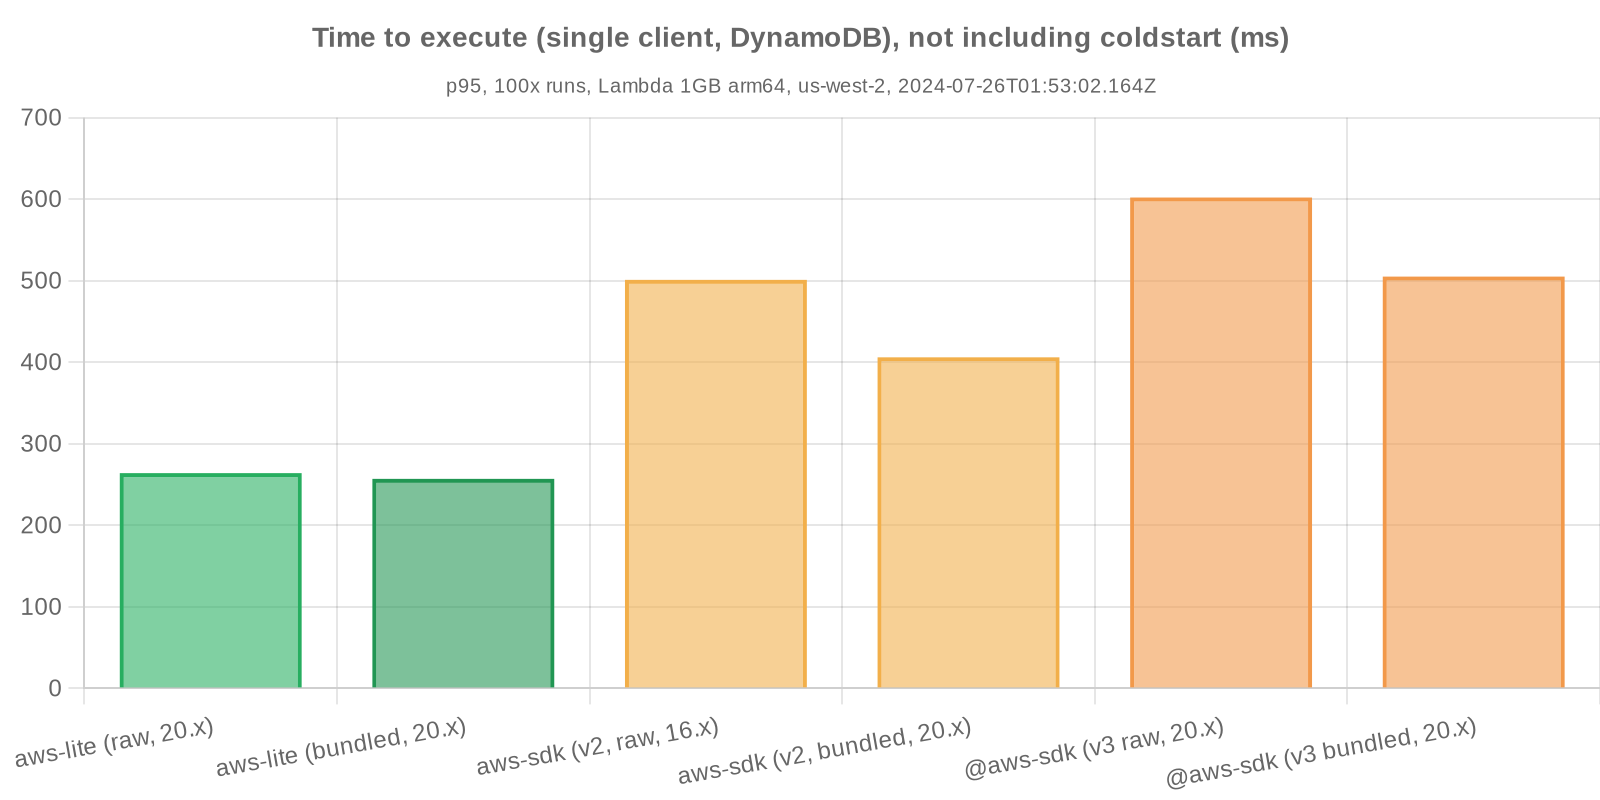 Benchmark statistics - Time to respond, not including coldstart (DynamoDB)